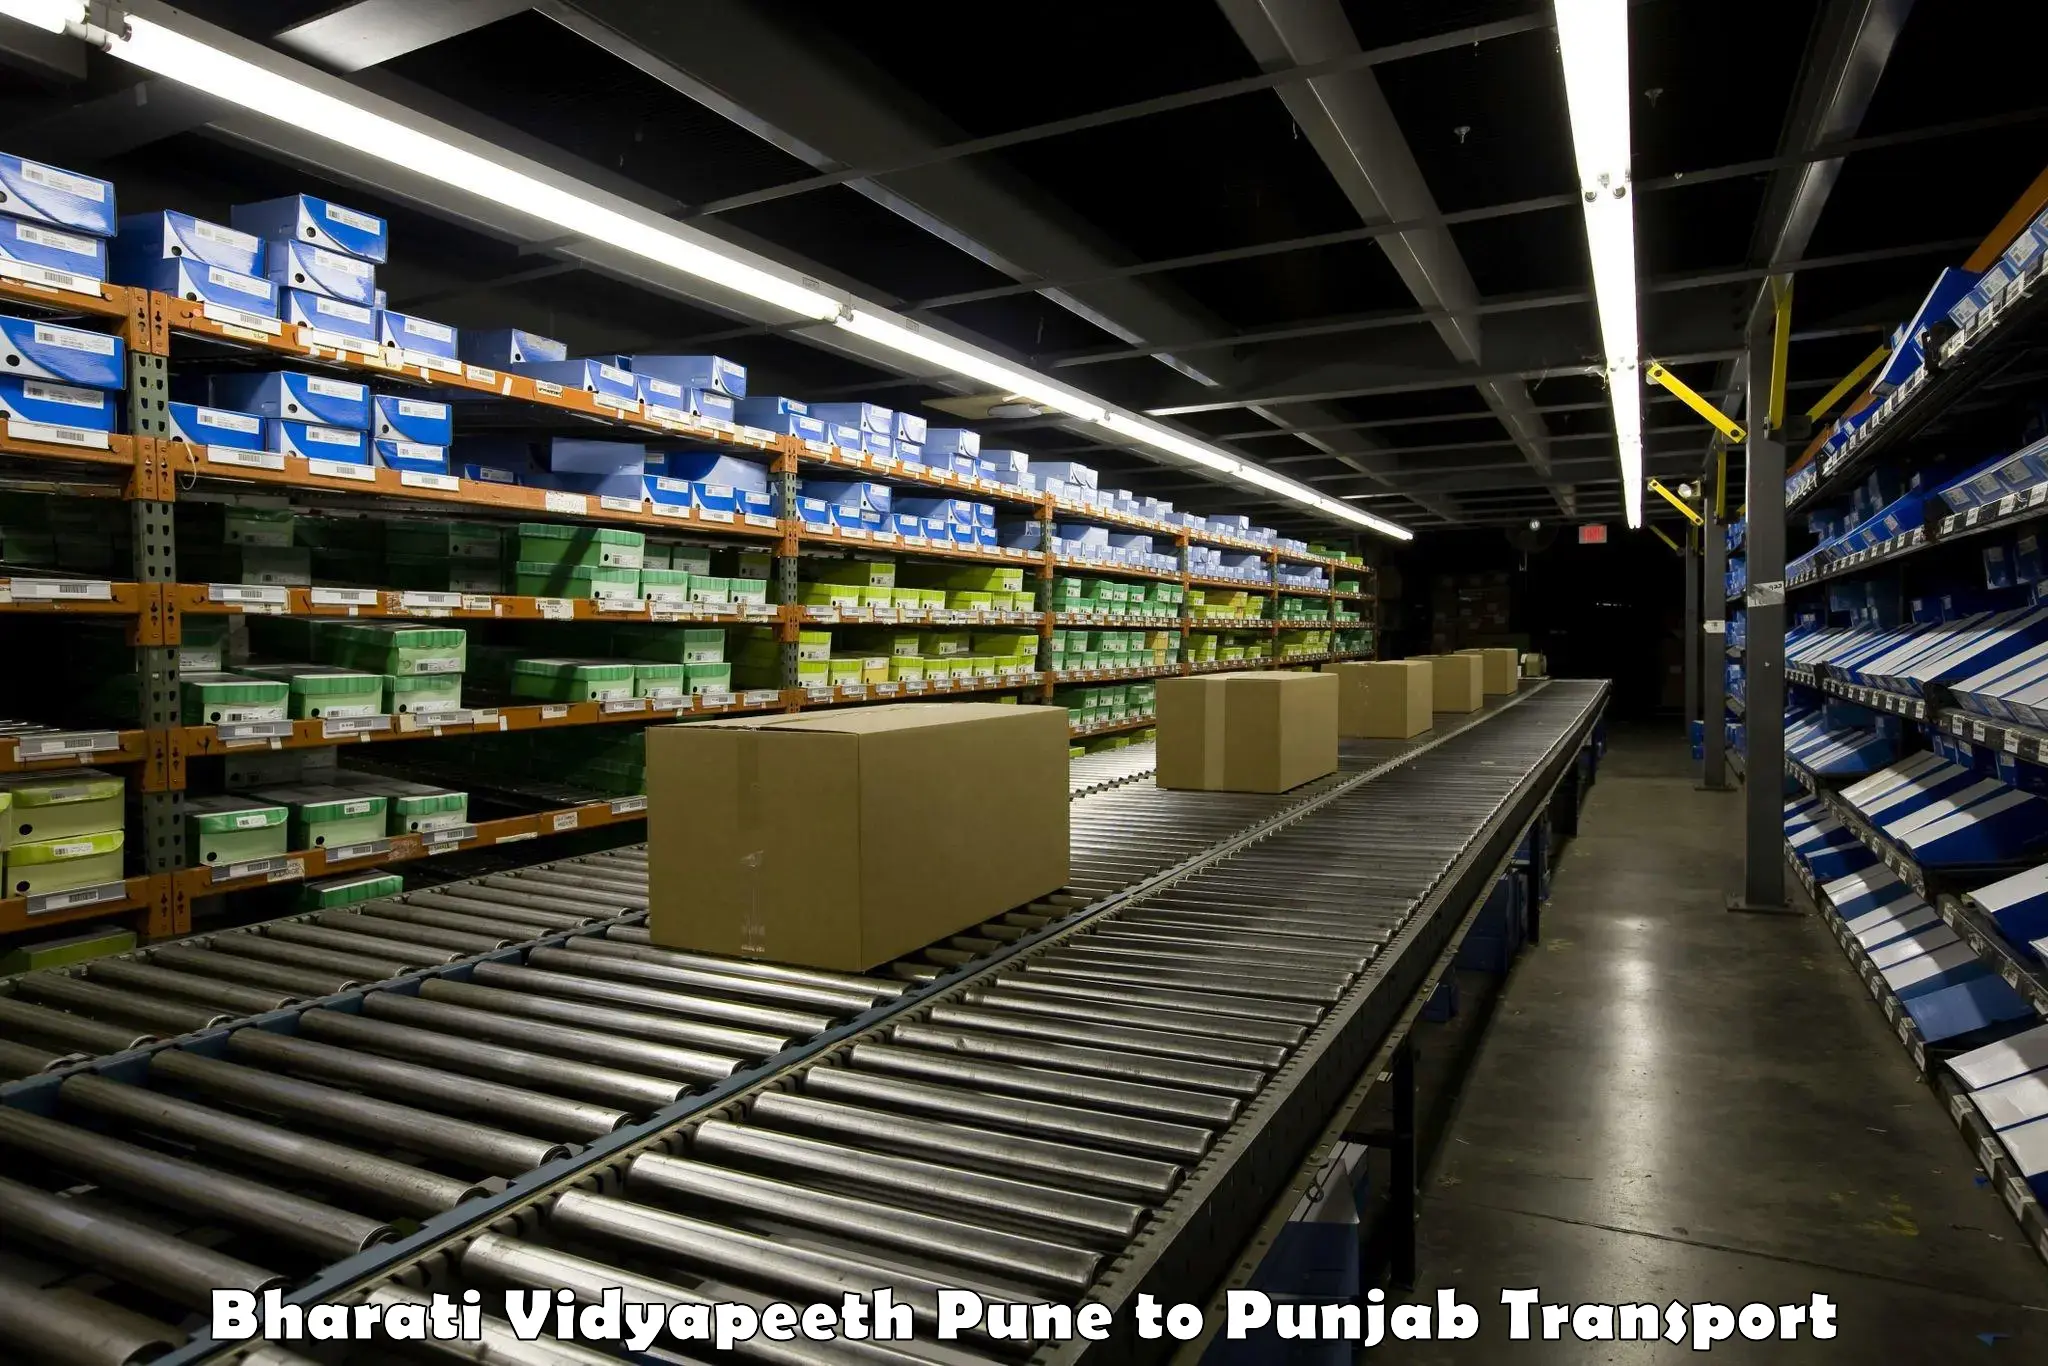 Delivery service Bharati Vidyapeeth Pune to Punjab